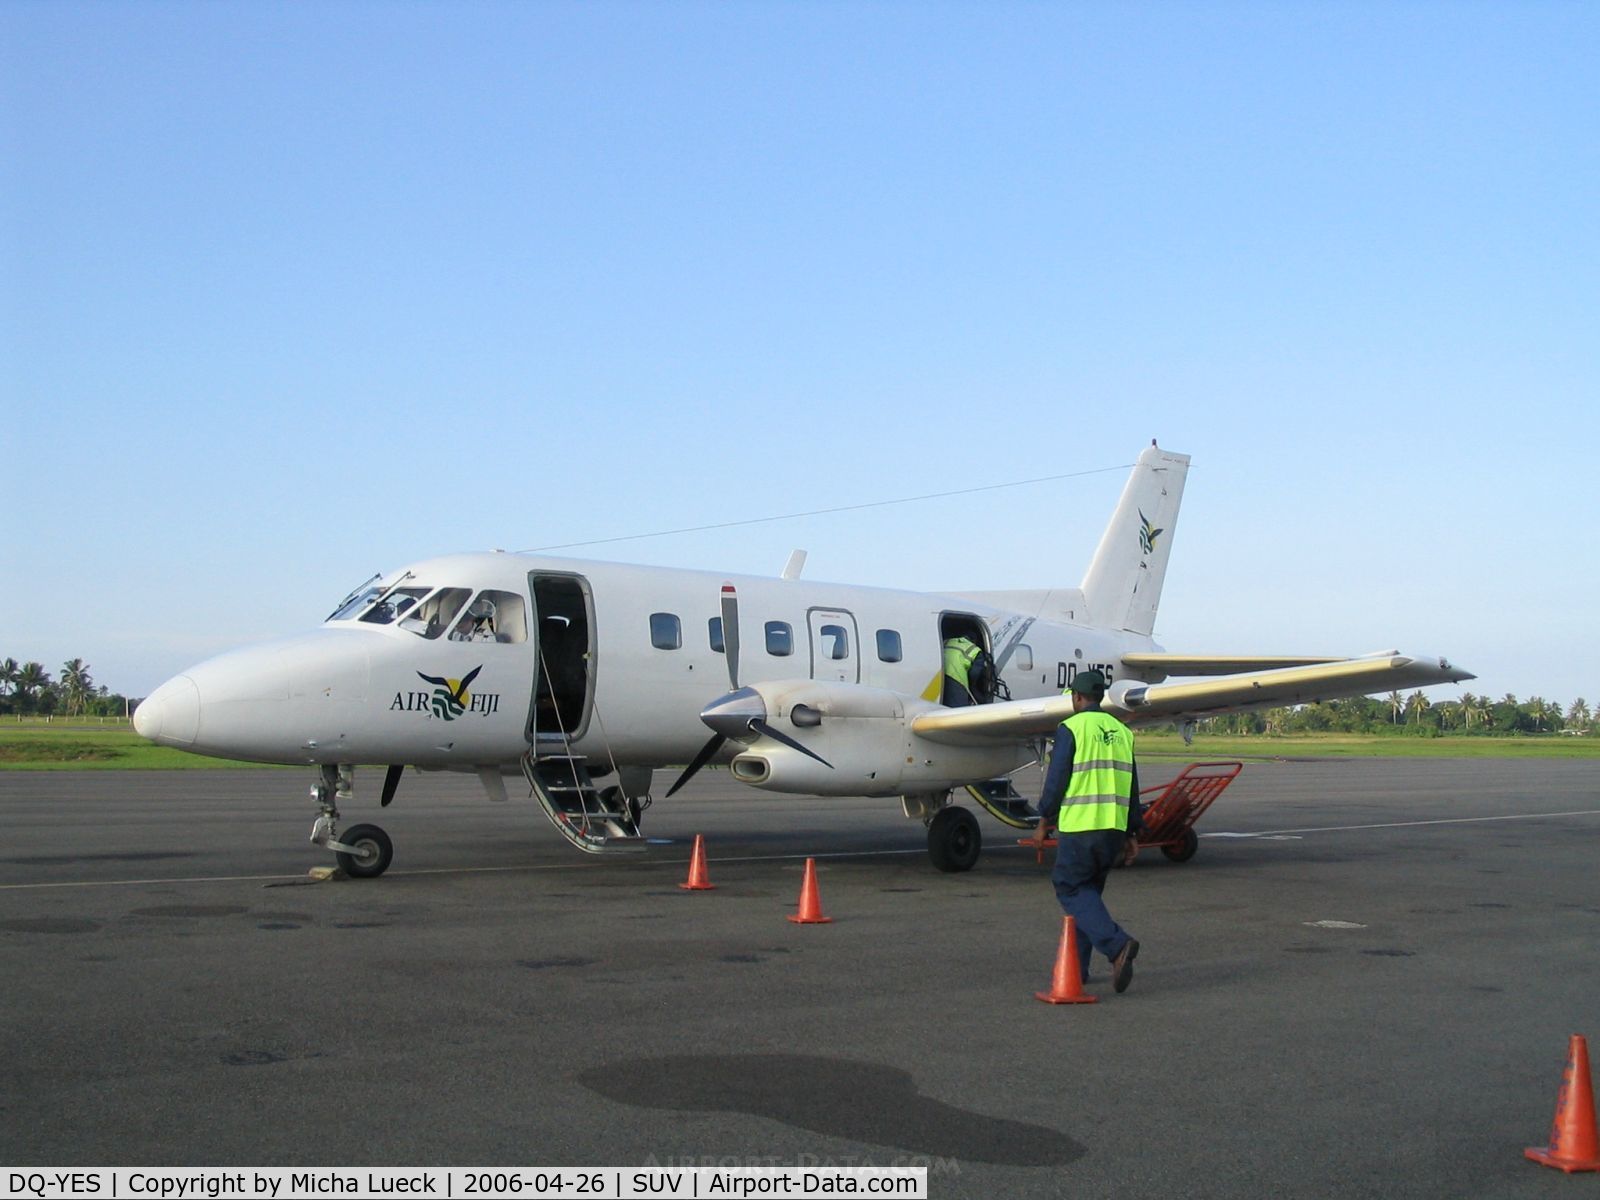 DQ-YES, 1980 Embraer EMB-110P2 Bandeirante C/N 110307, Air Fiji's EMB 100 Bandeirante at Suva, just arrived from Savusavu